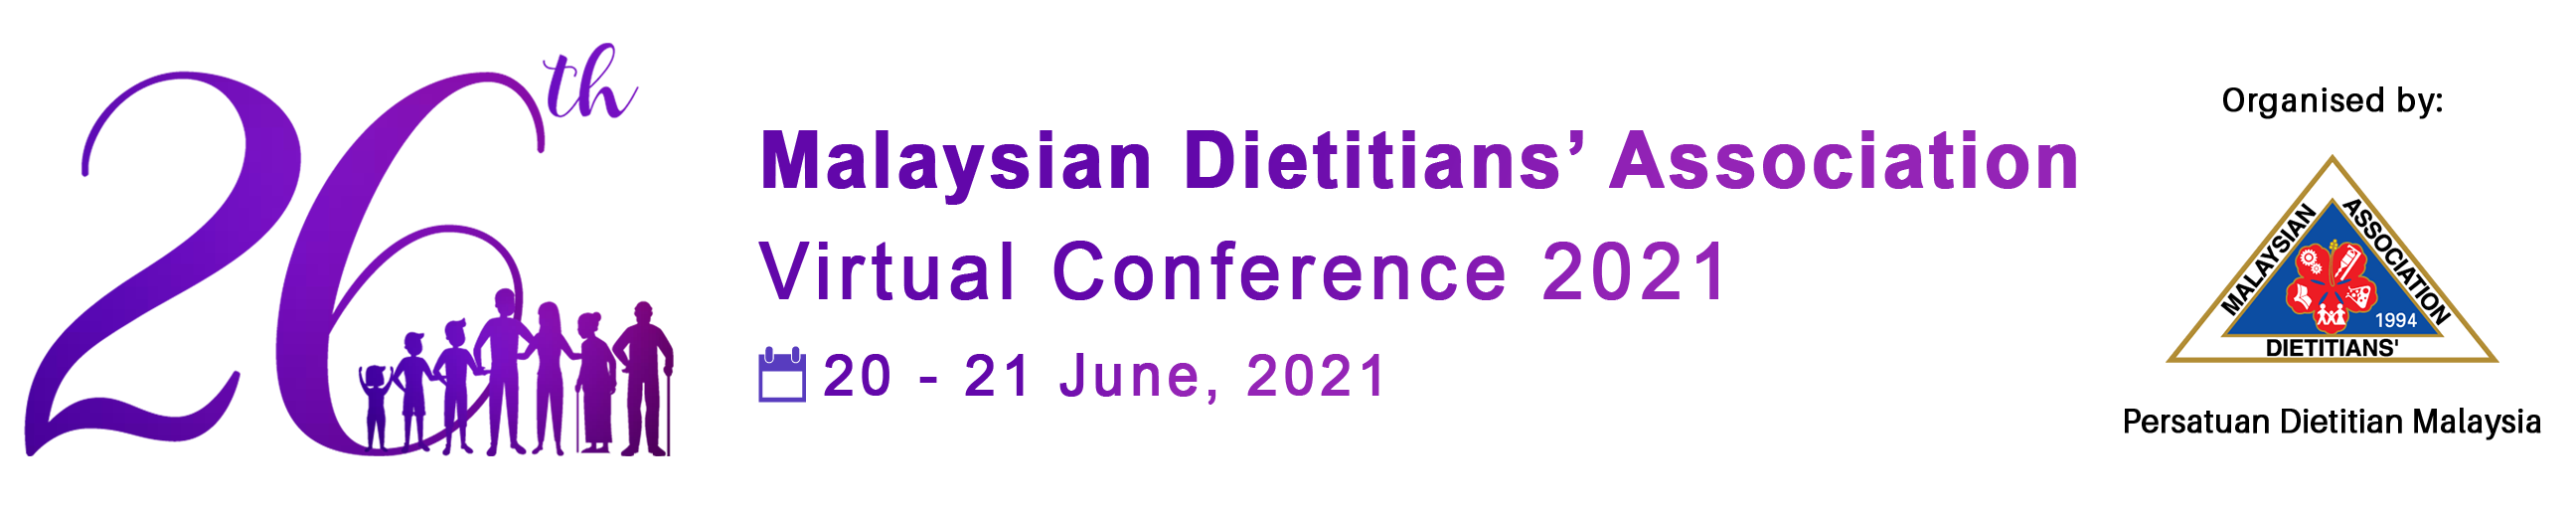 26th MDA National Conference (MDA 2021)